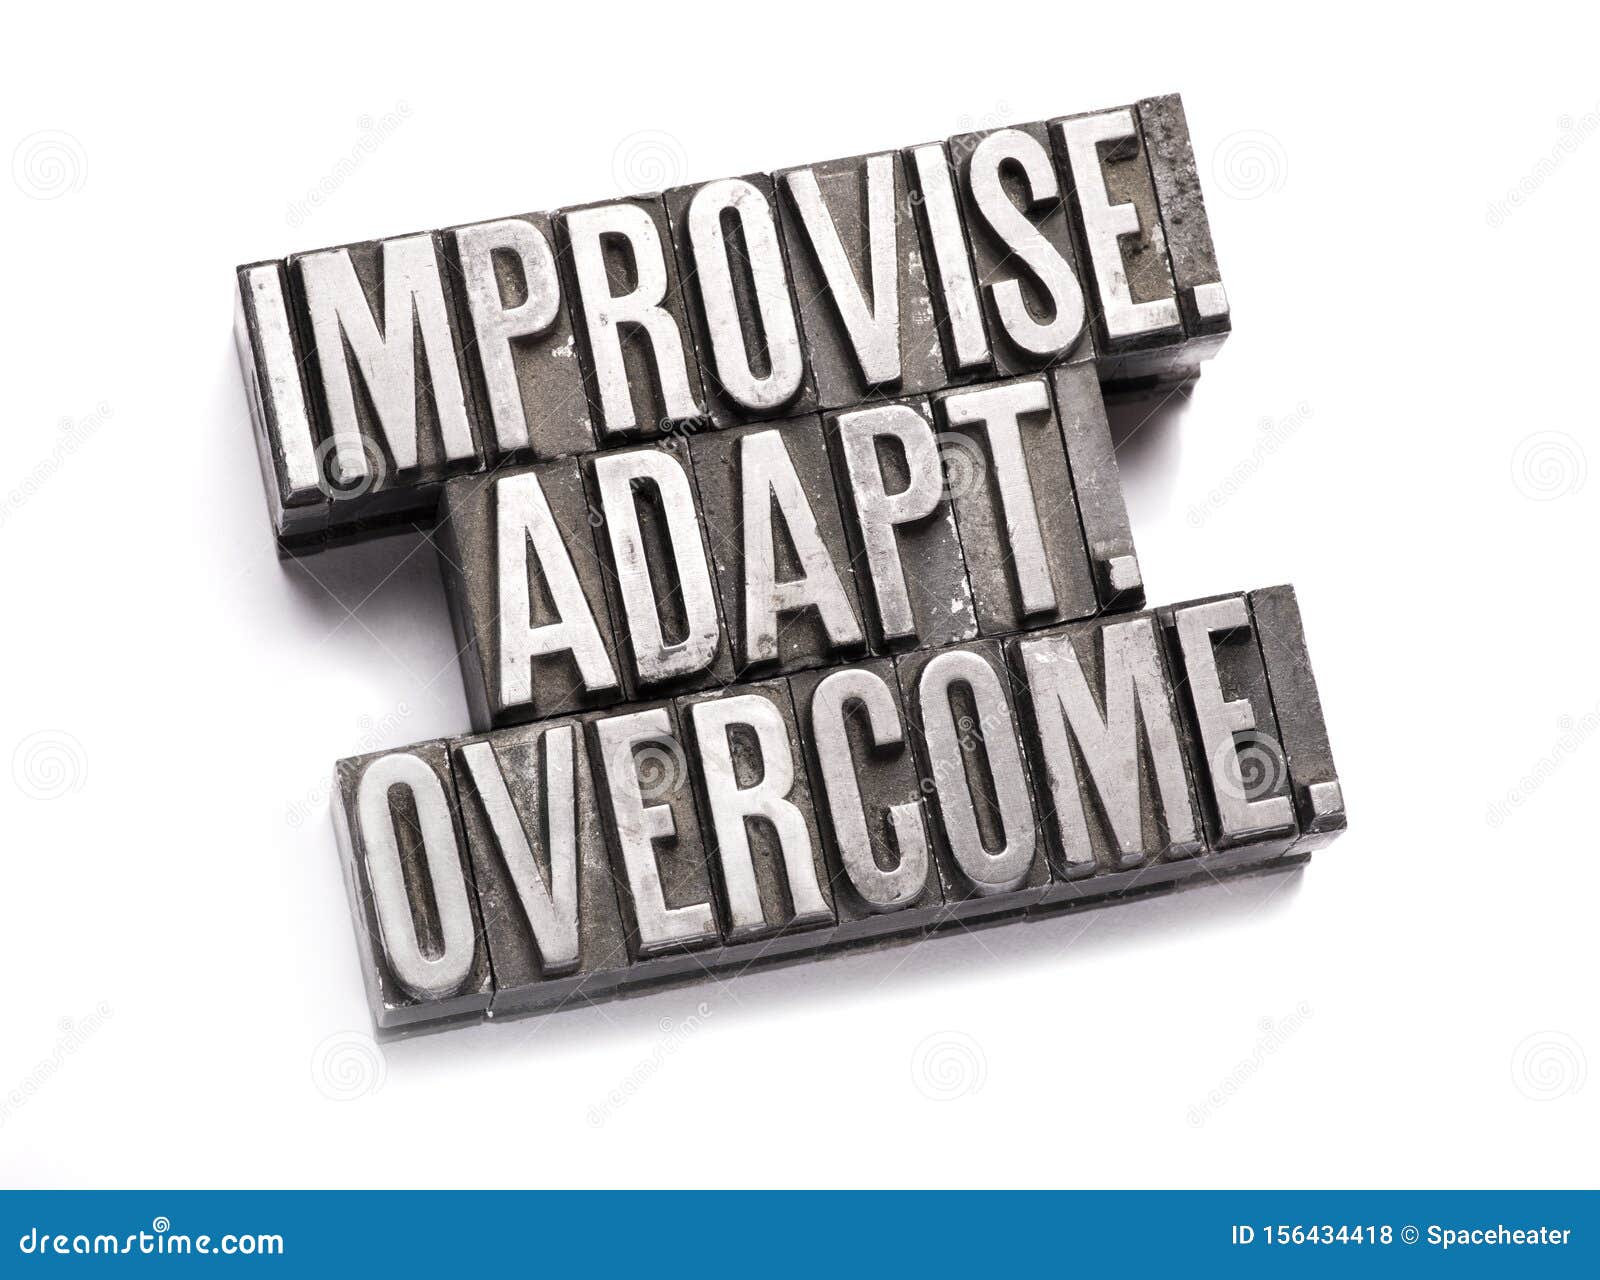 Improvise, adapt, overcome stock photo. Image of motivational - 156434418